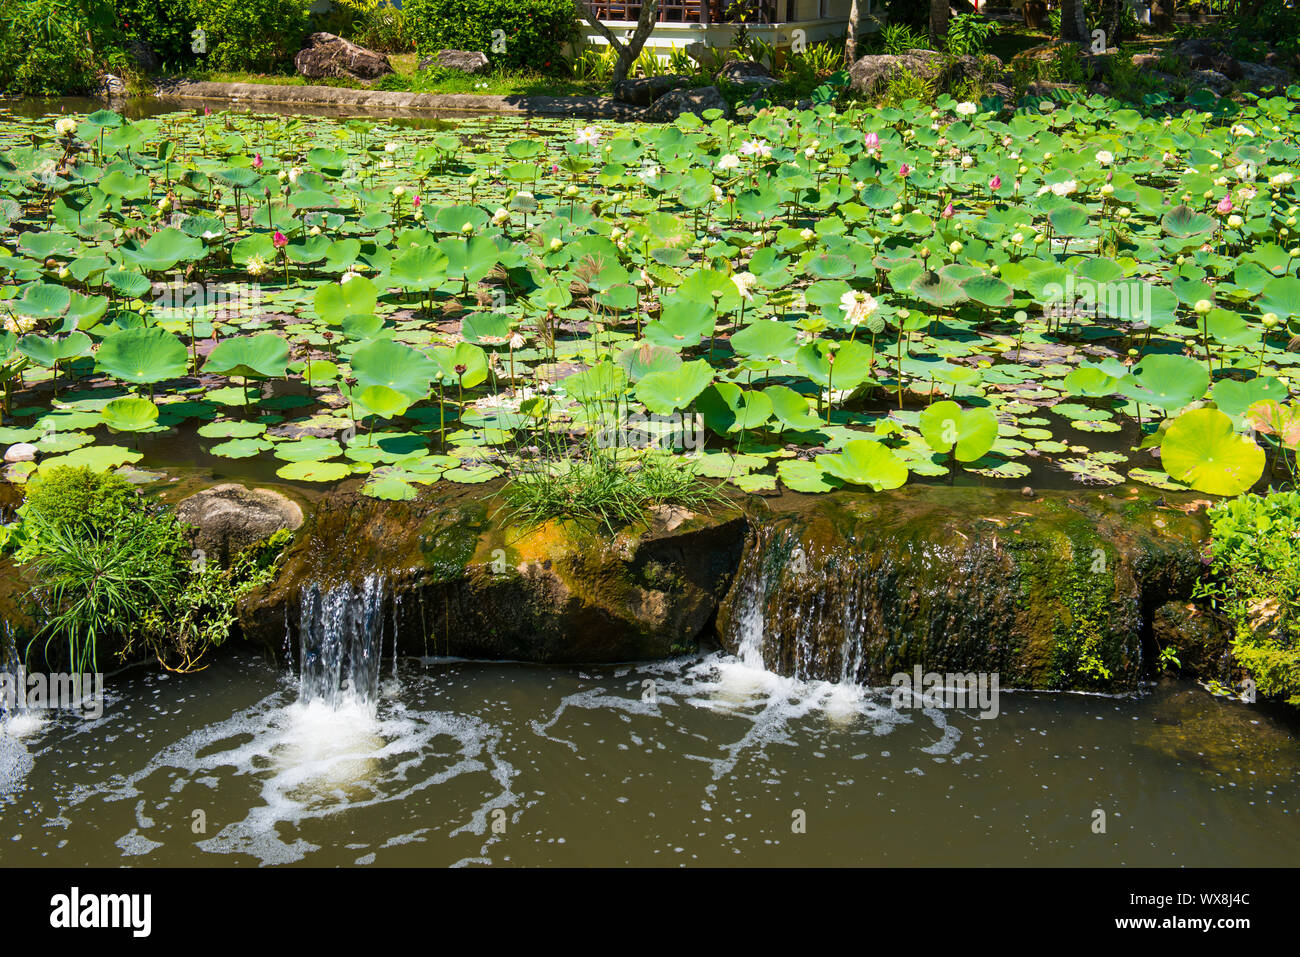 Pond with lotus flowers Stock Photo